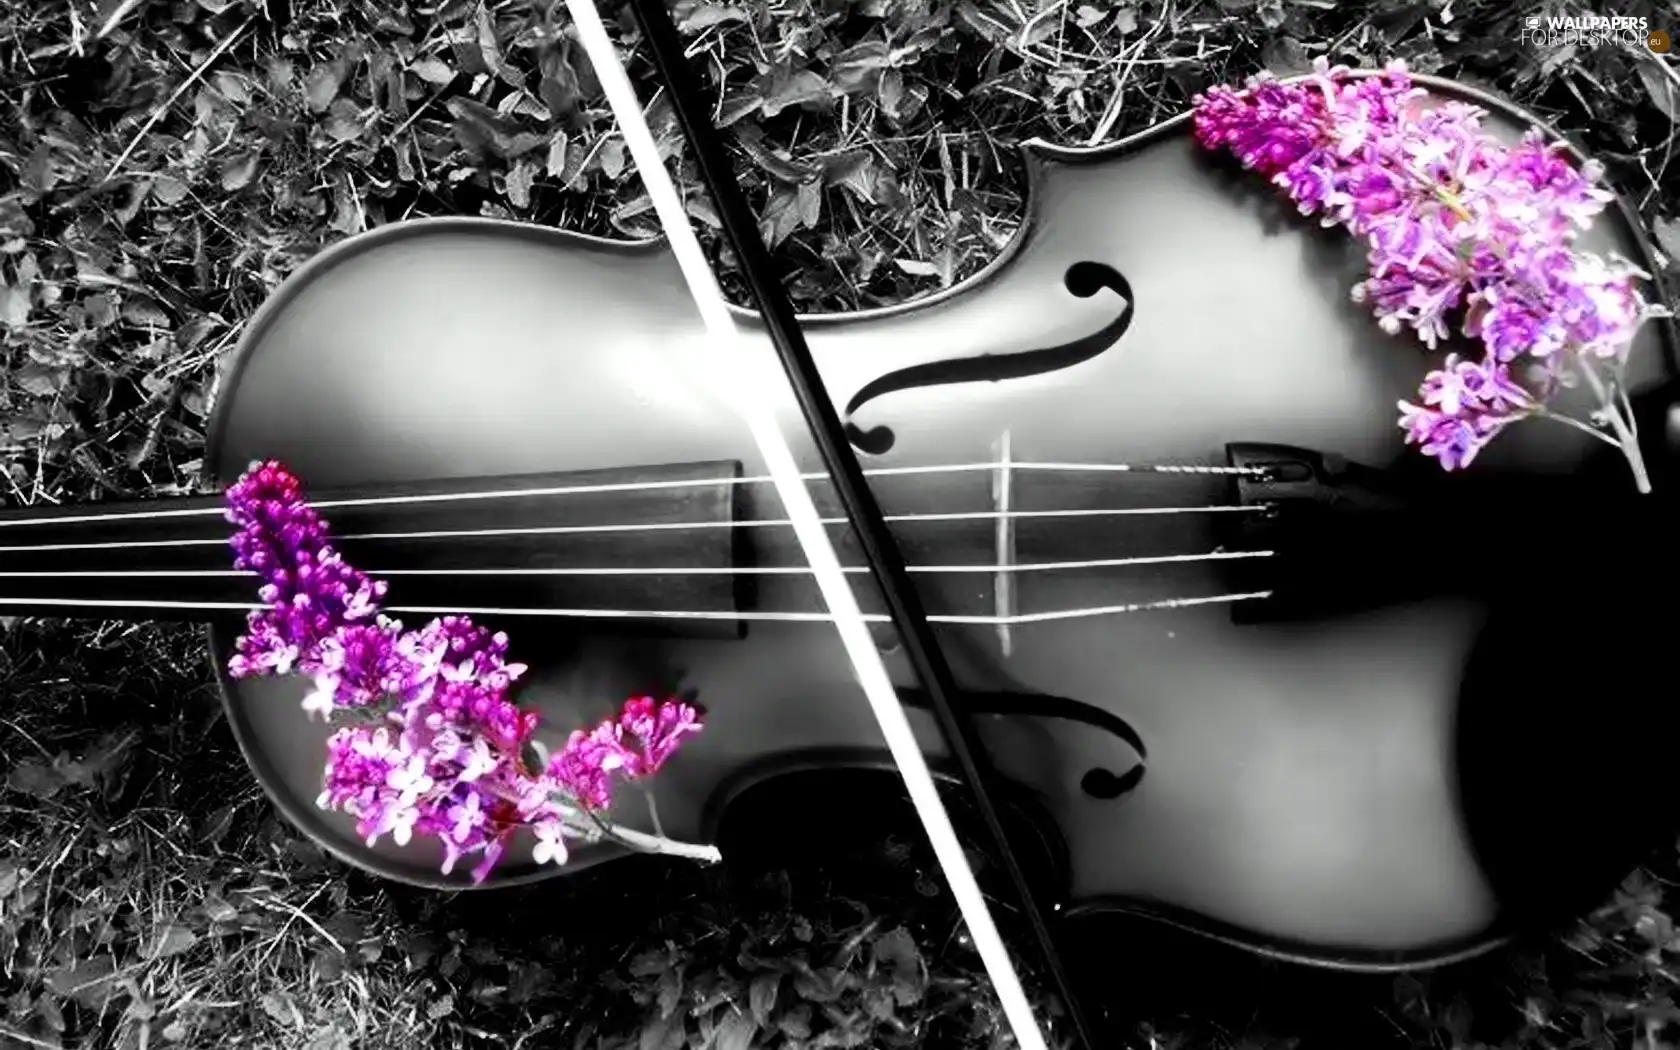 Flowers, violin, color